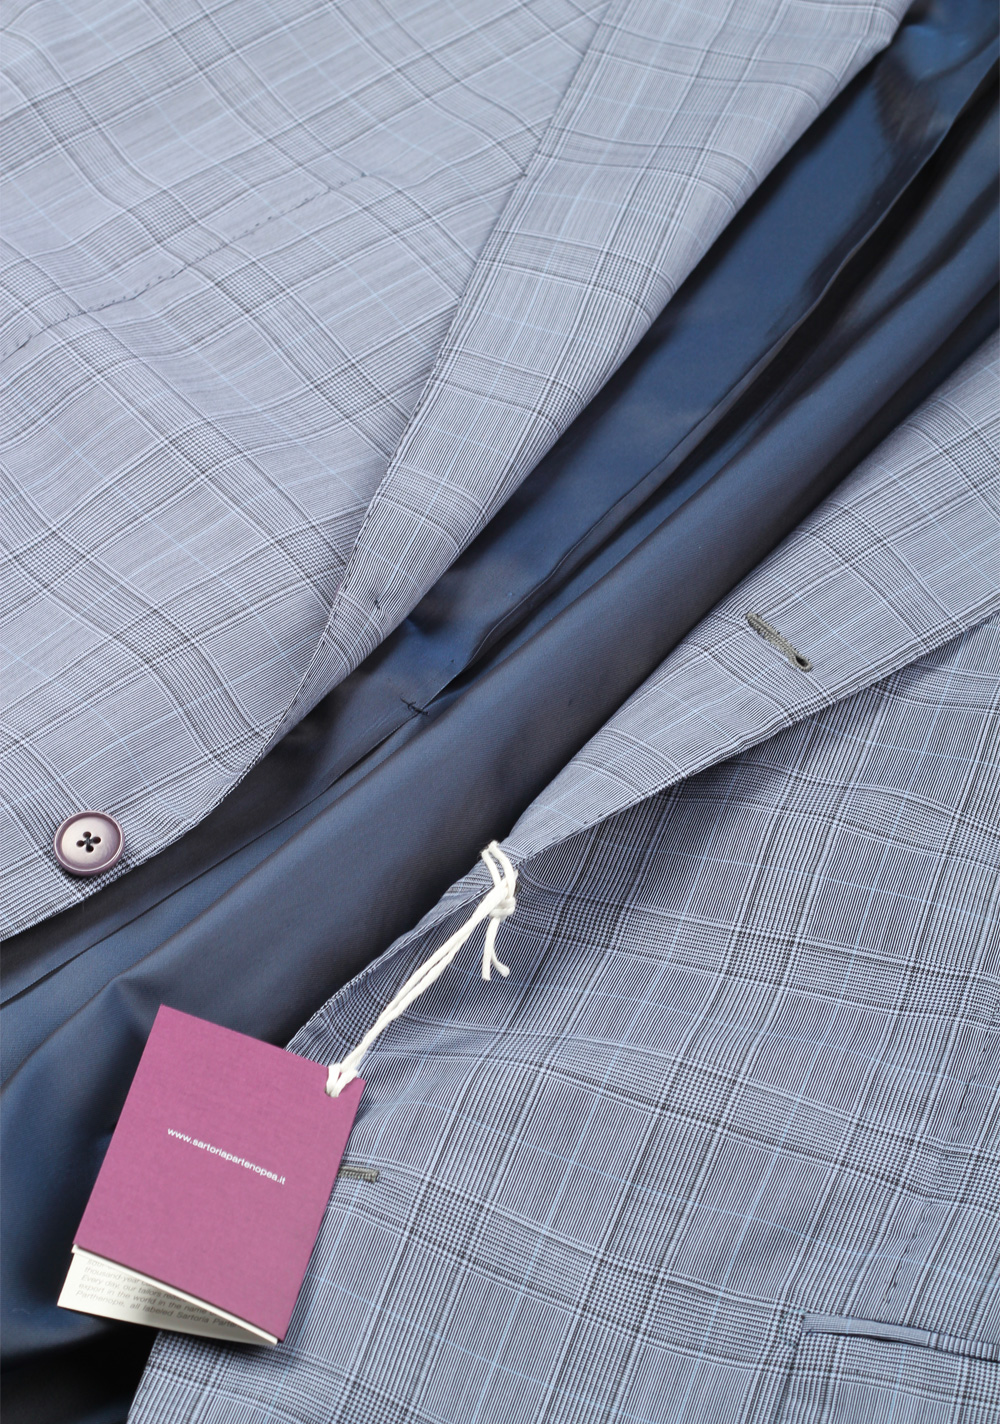 Sartoria Partenopea Blue Suit Size 58 / 48R U.S. In Wool Mohair | Costume Limité